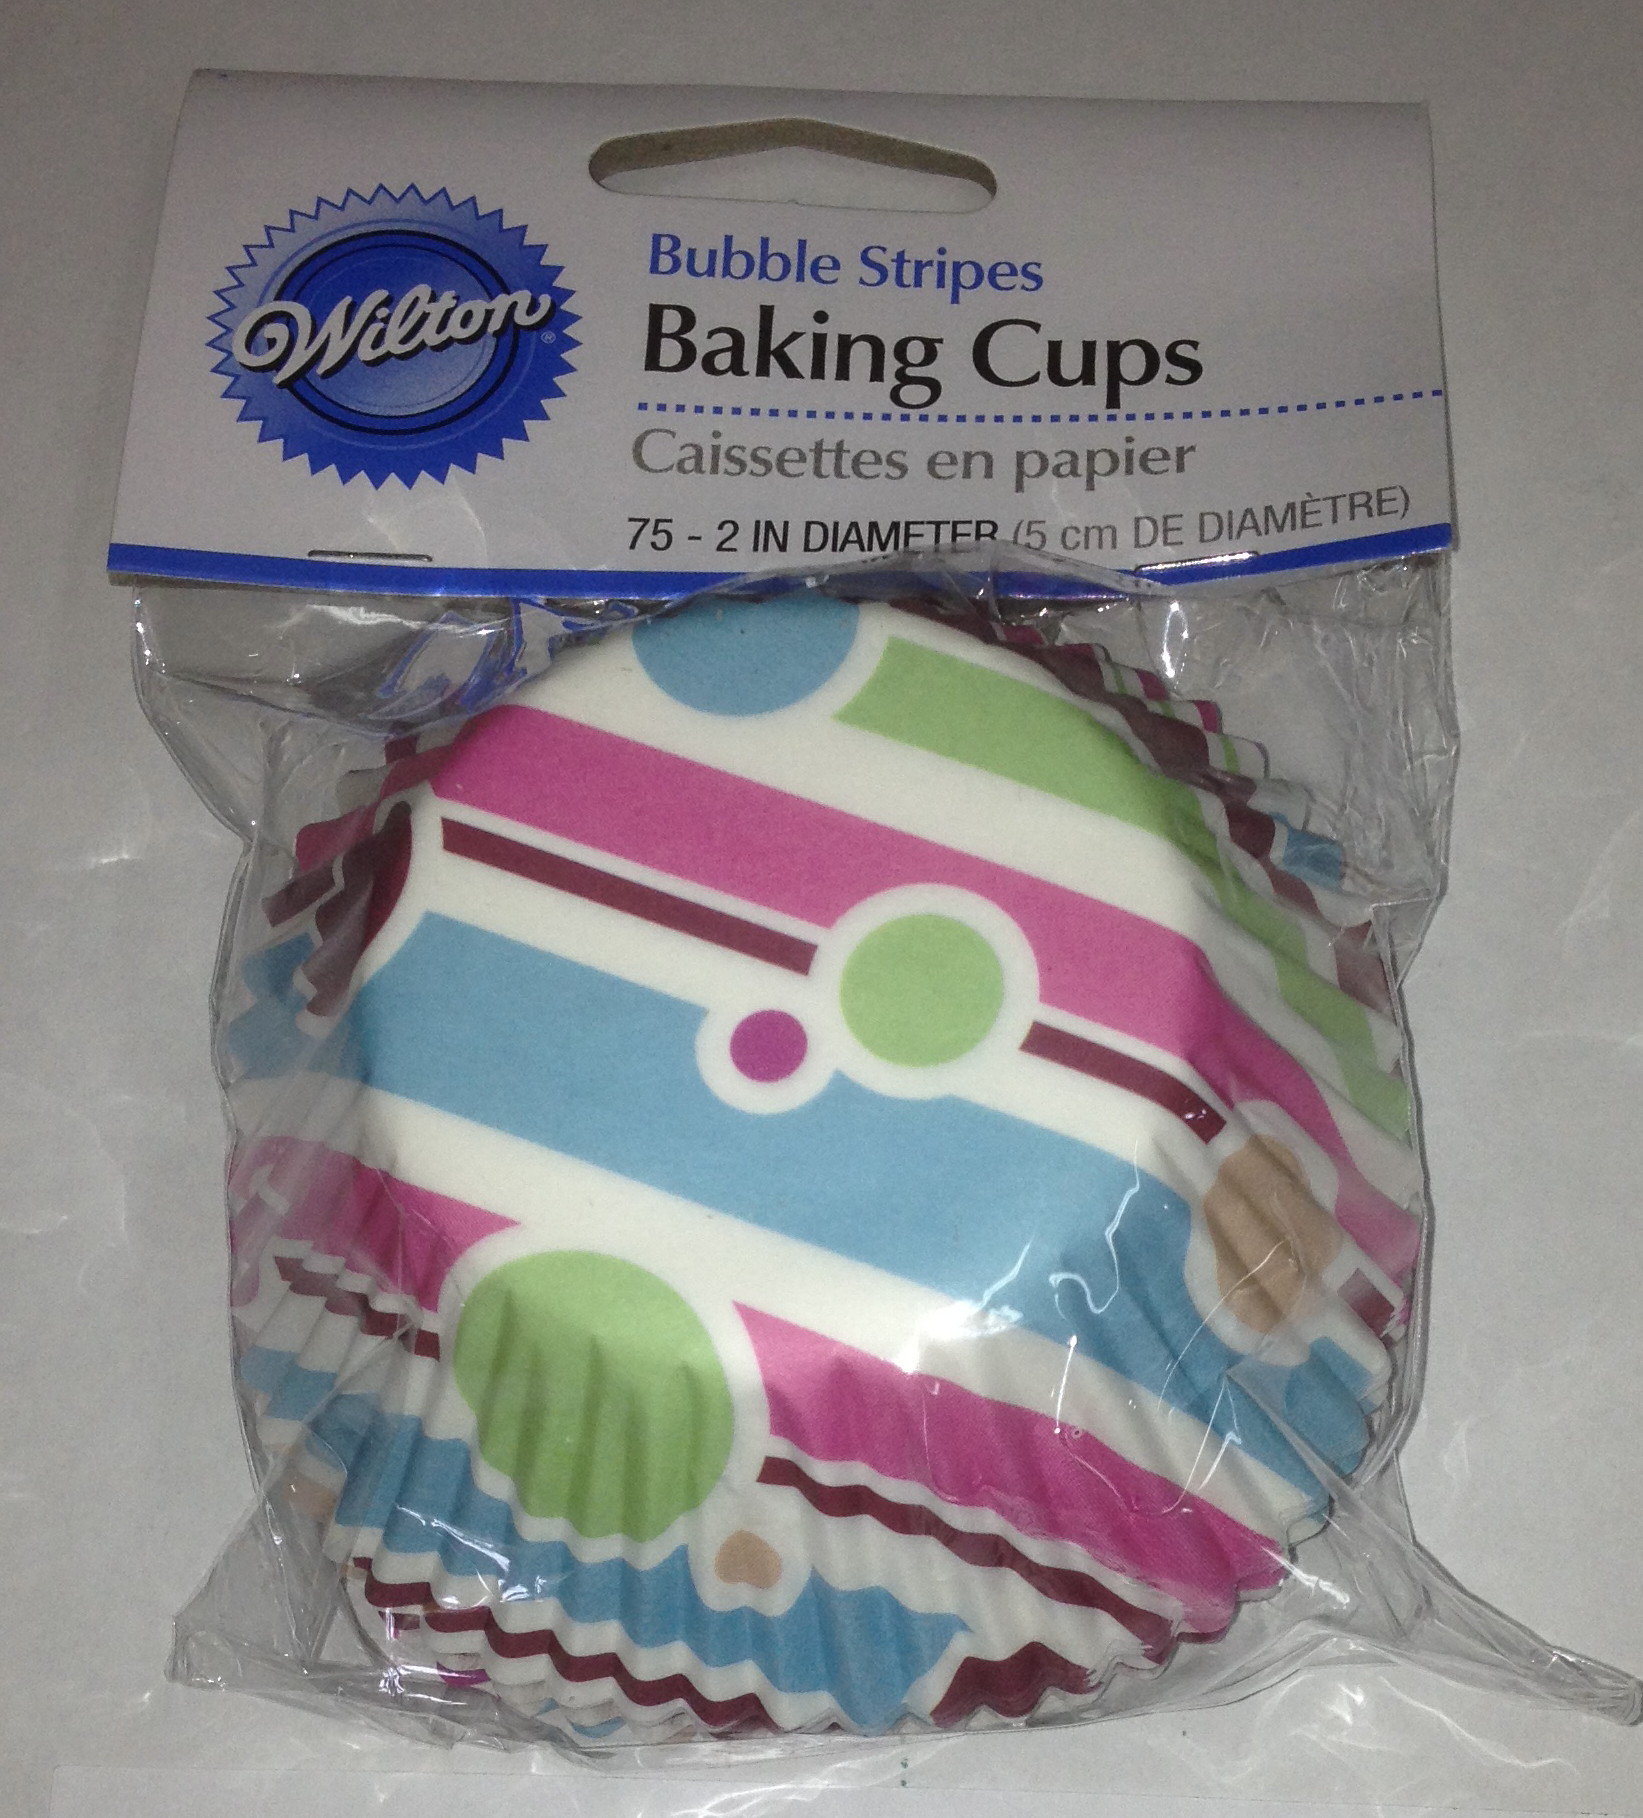 Bubble Stripes Baking Cups 75